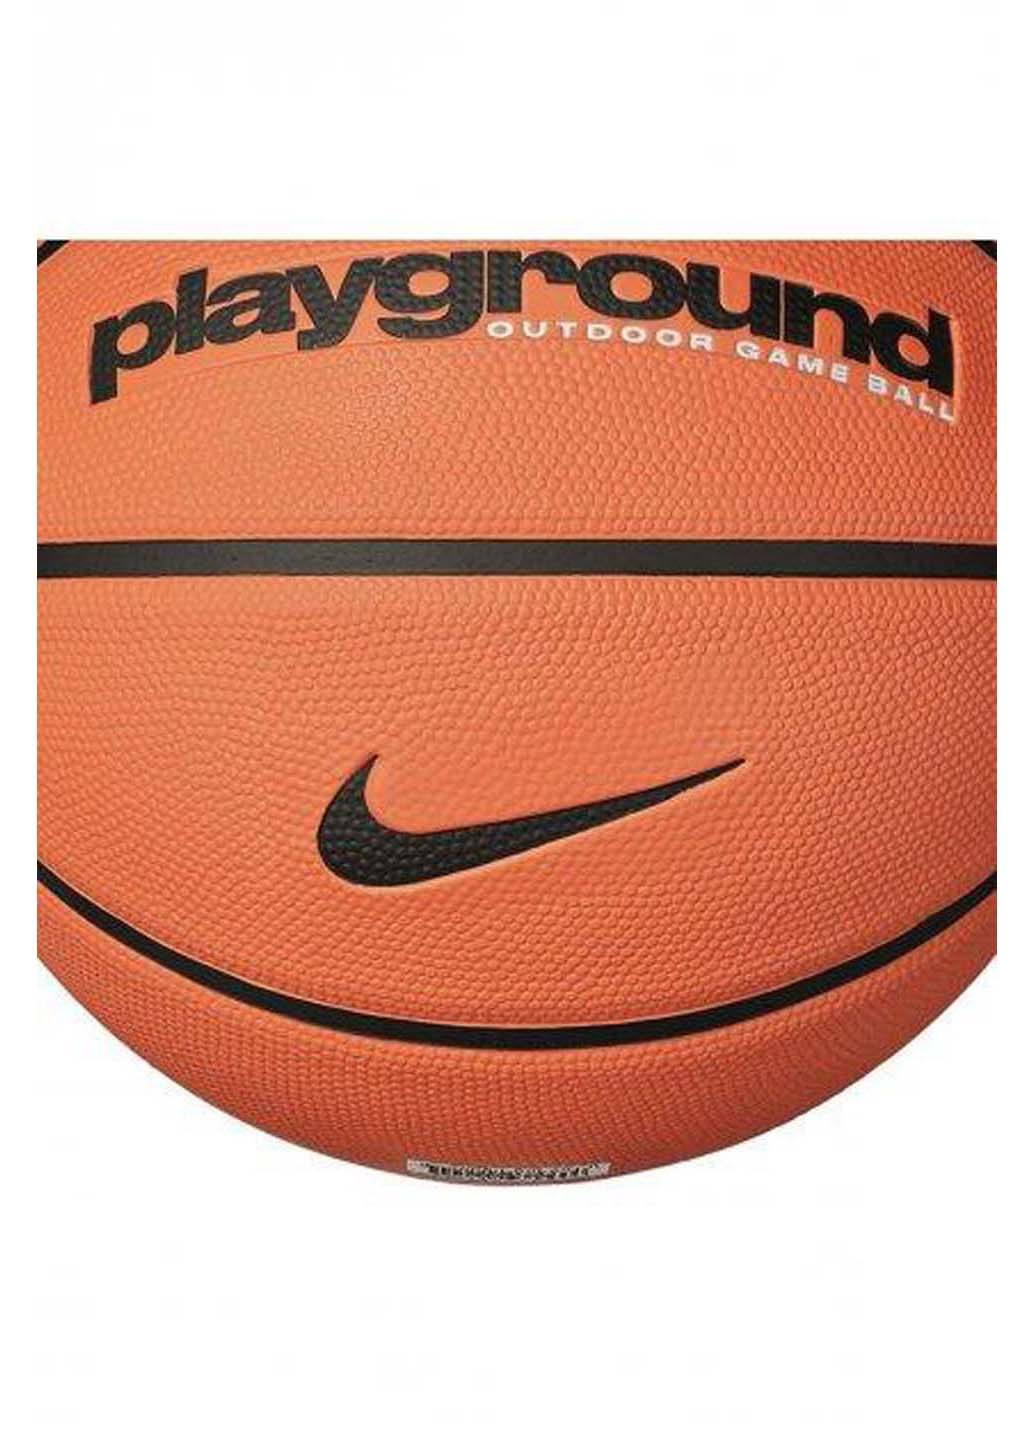 Універсальний баскетбольний м'яч Everyday Playground 8P Graphic Deflated 7 Nike (257607076)